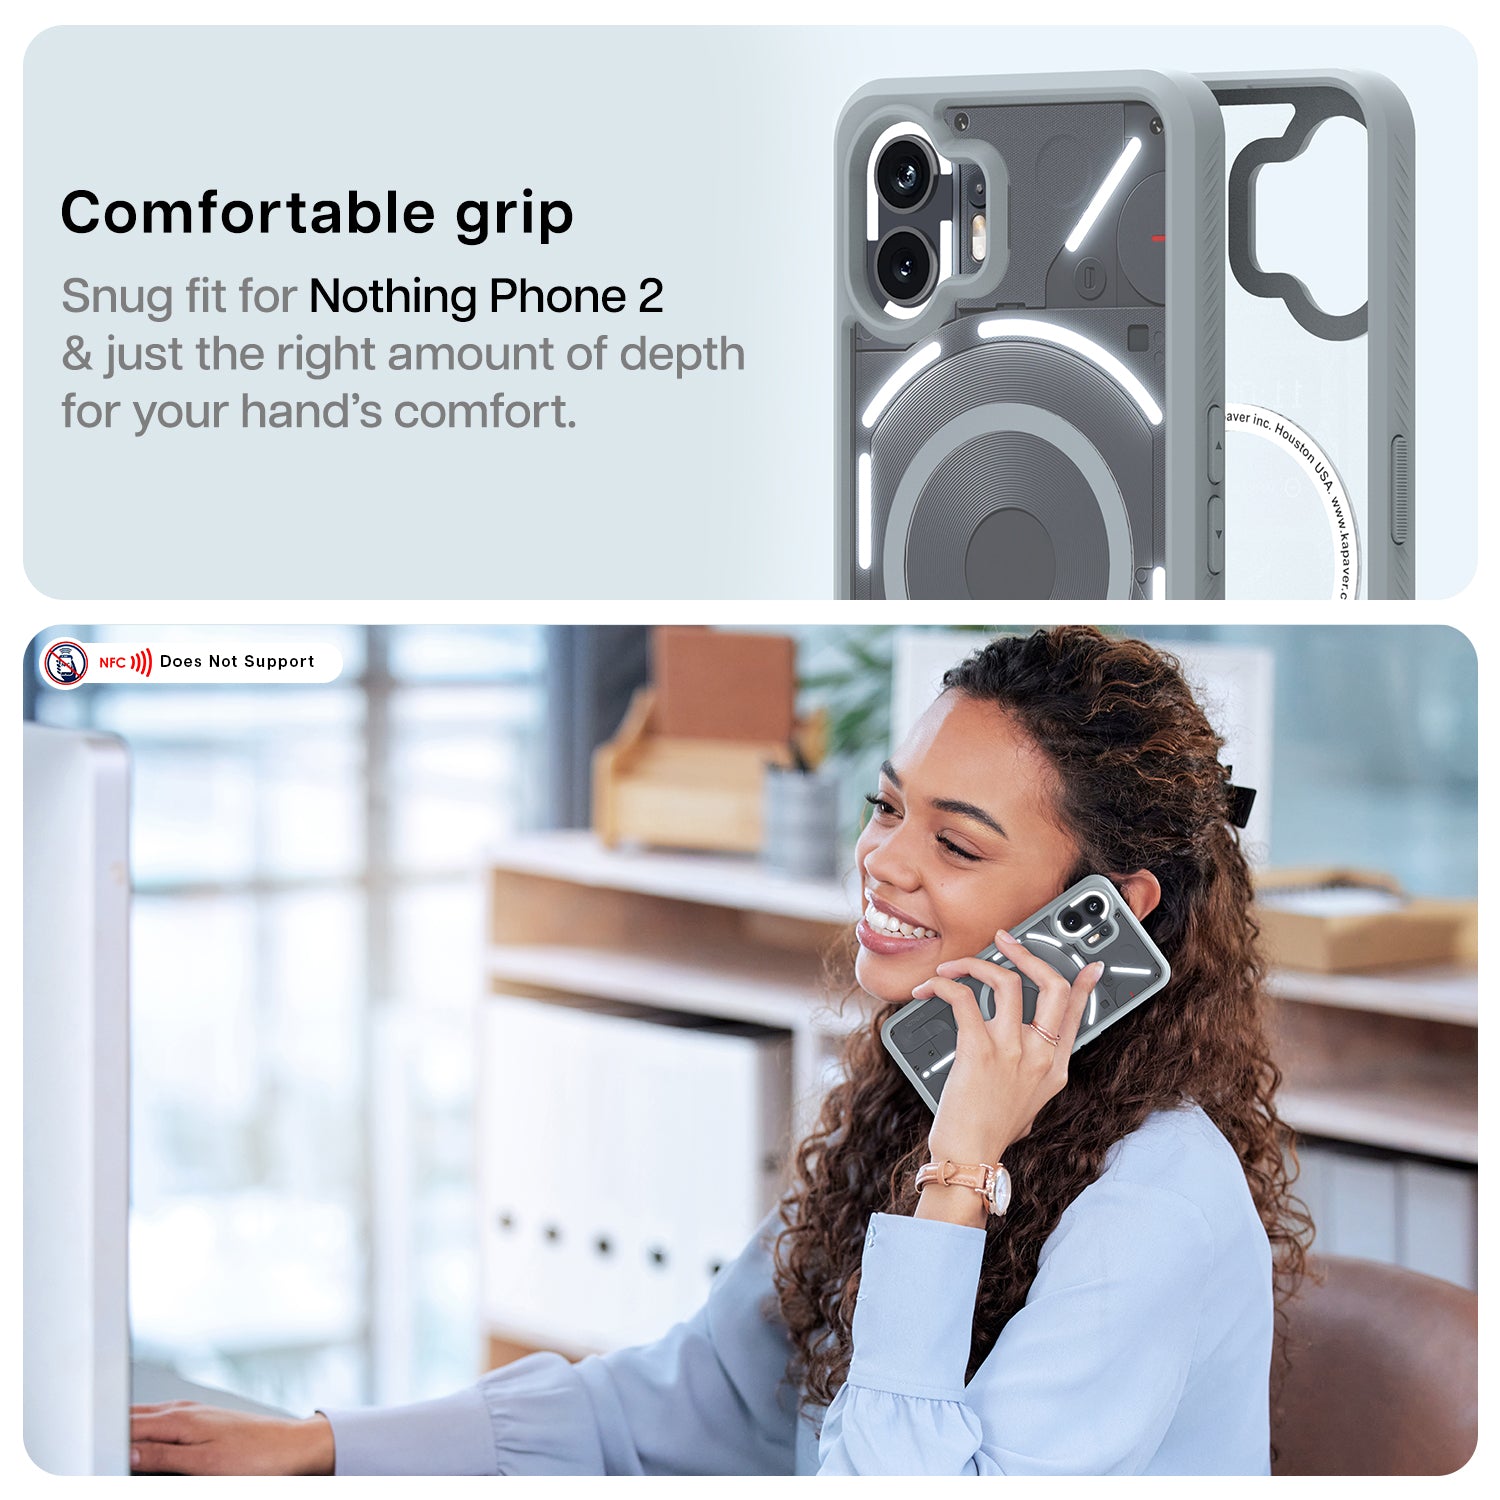 Nothing Phone 1 5G Back Cover Case, Impulse - Gray, KAPAVER